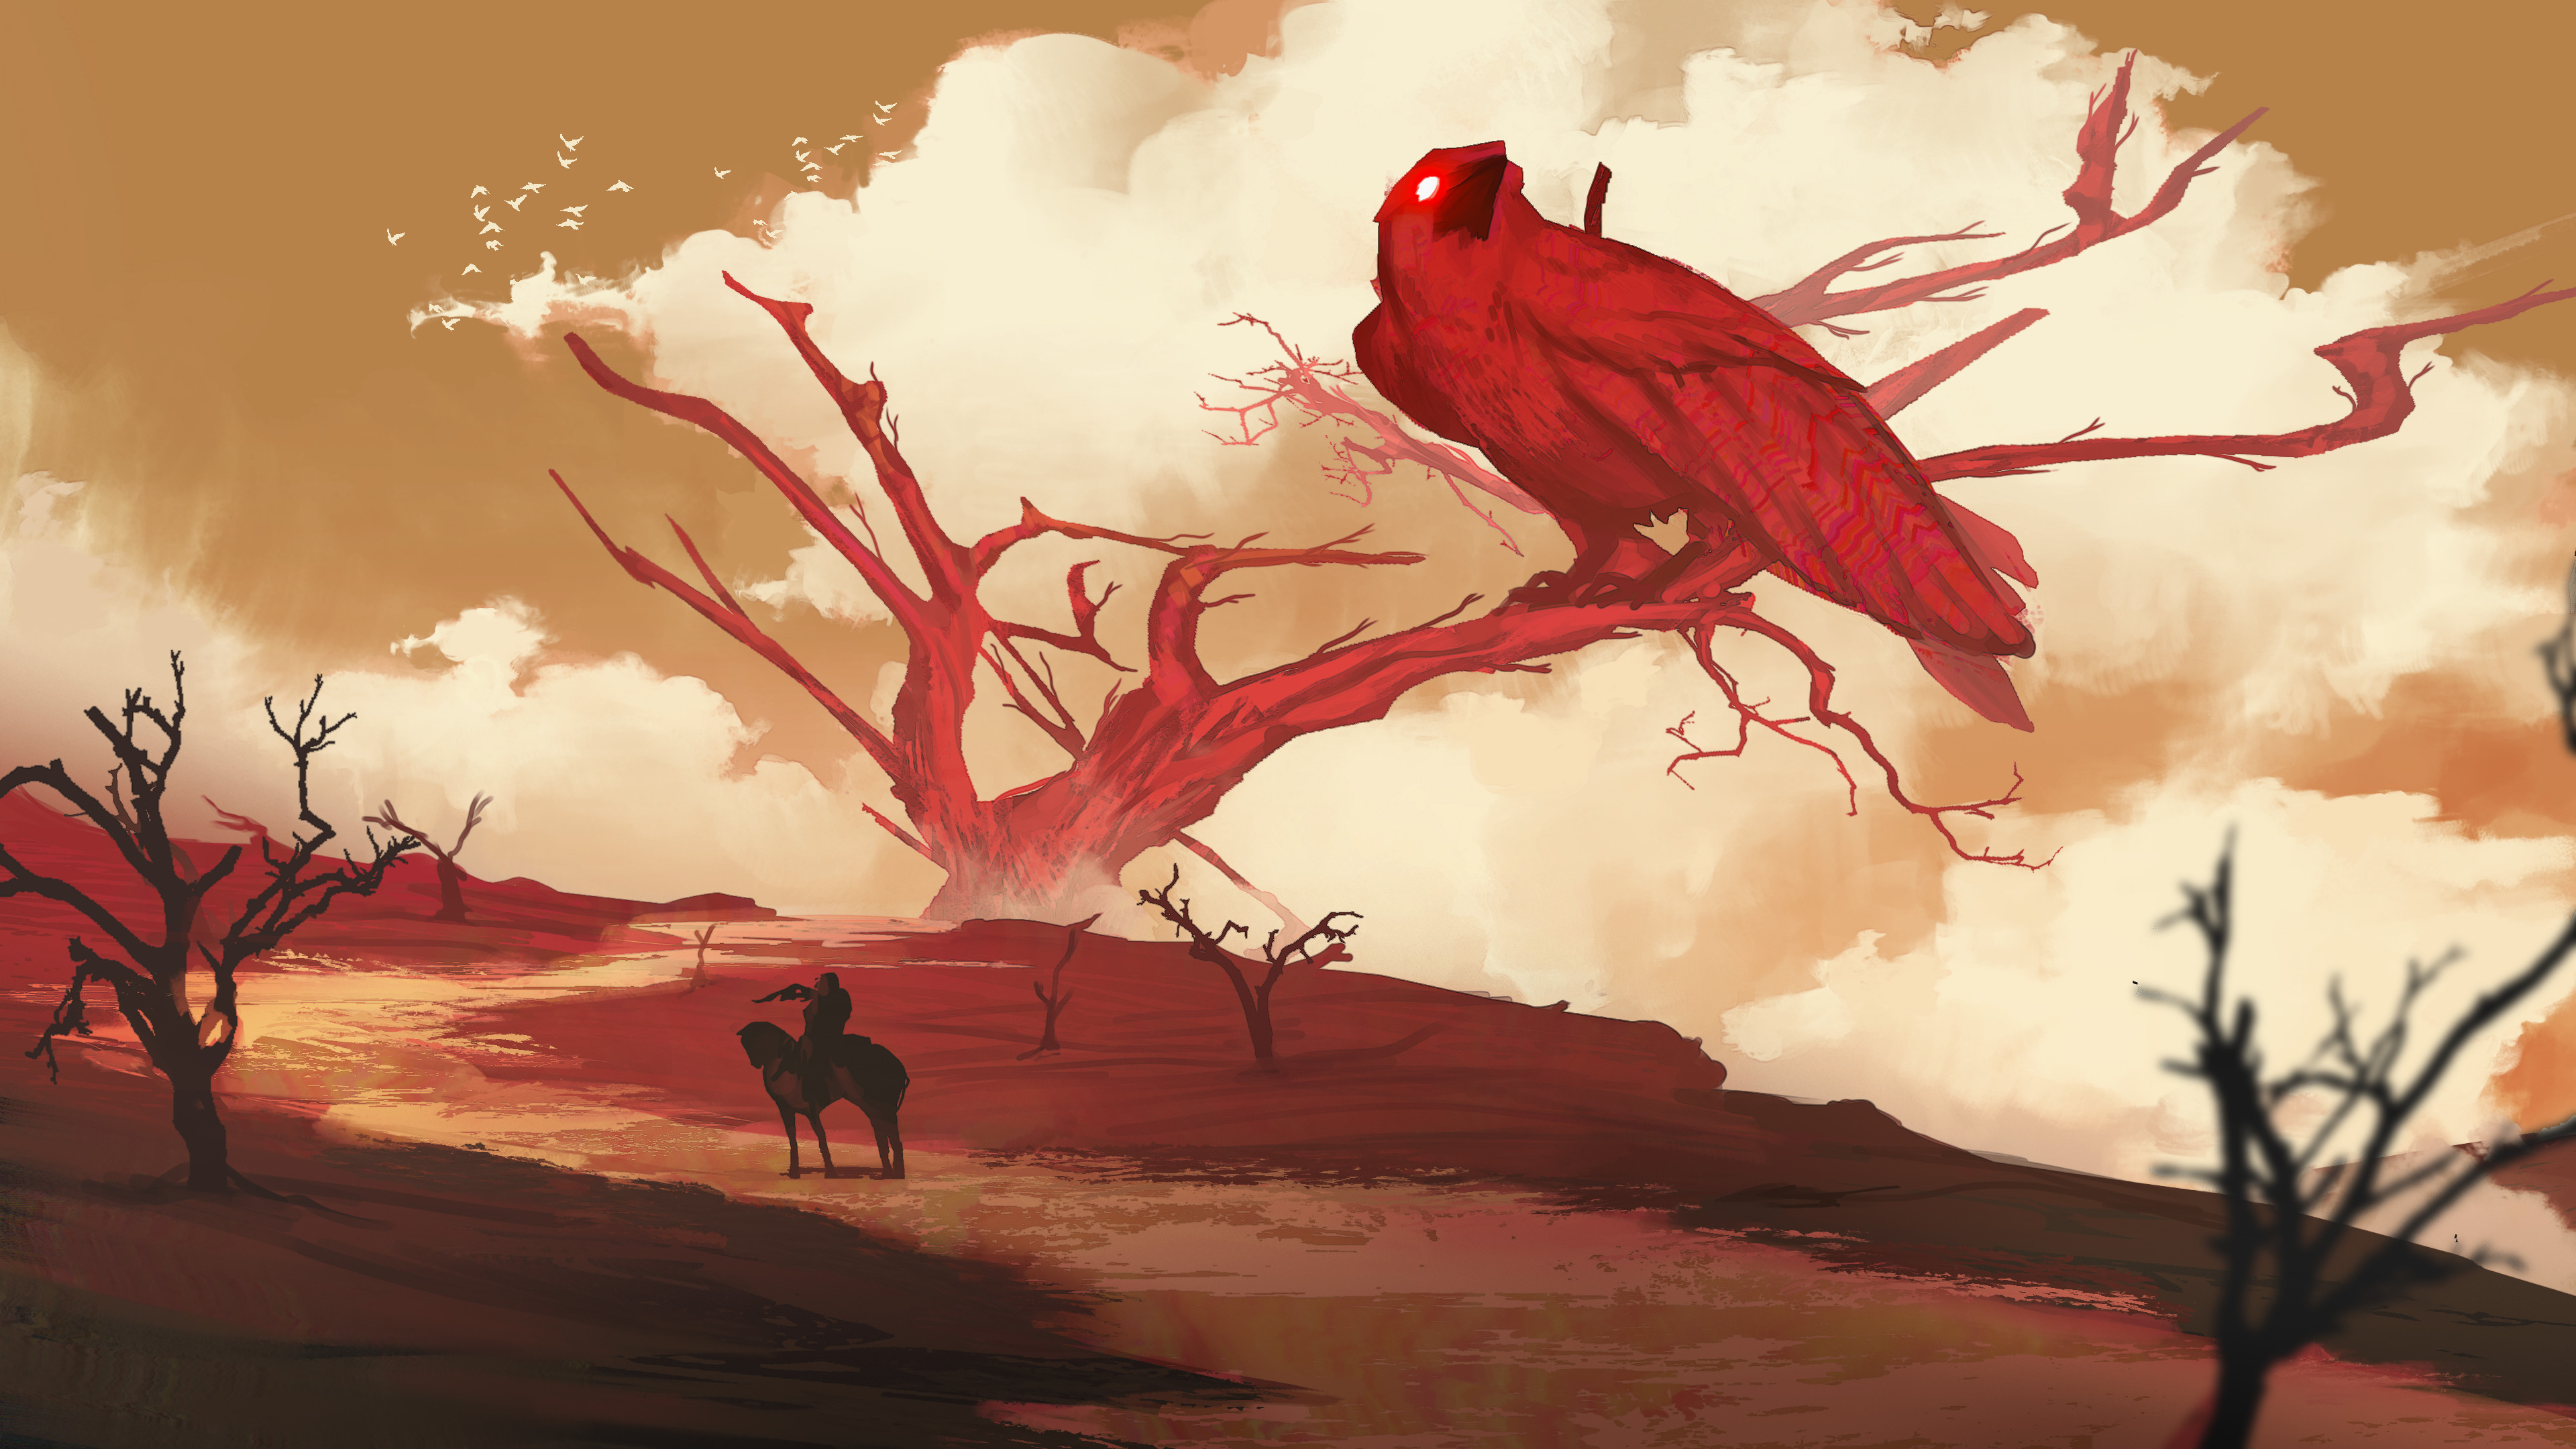 General 3840x2160 digital art Egor Poskryakov fantasy art desert horse birds crow red clouds trees dead trees